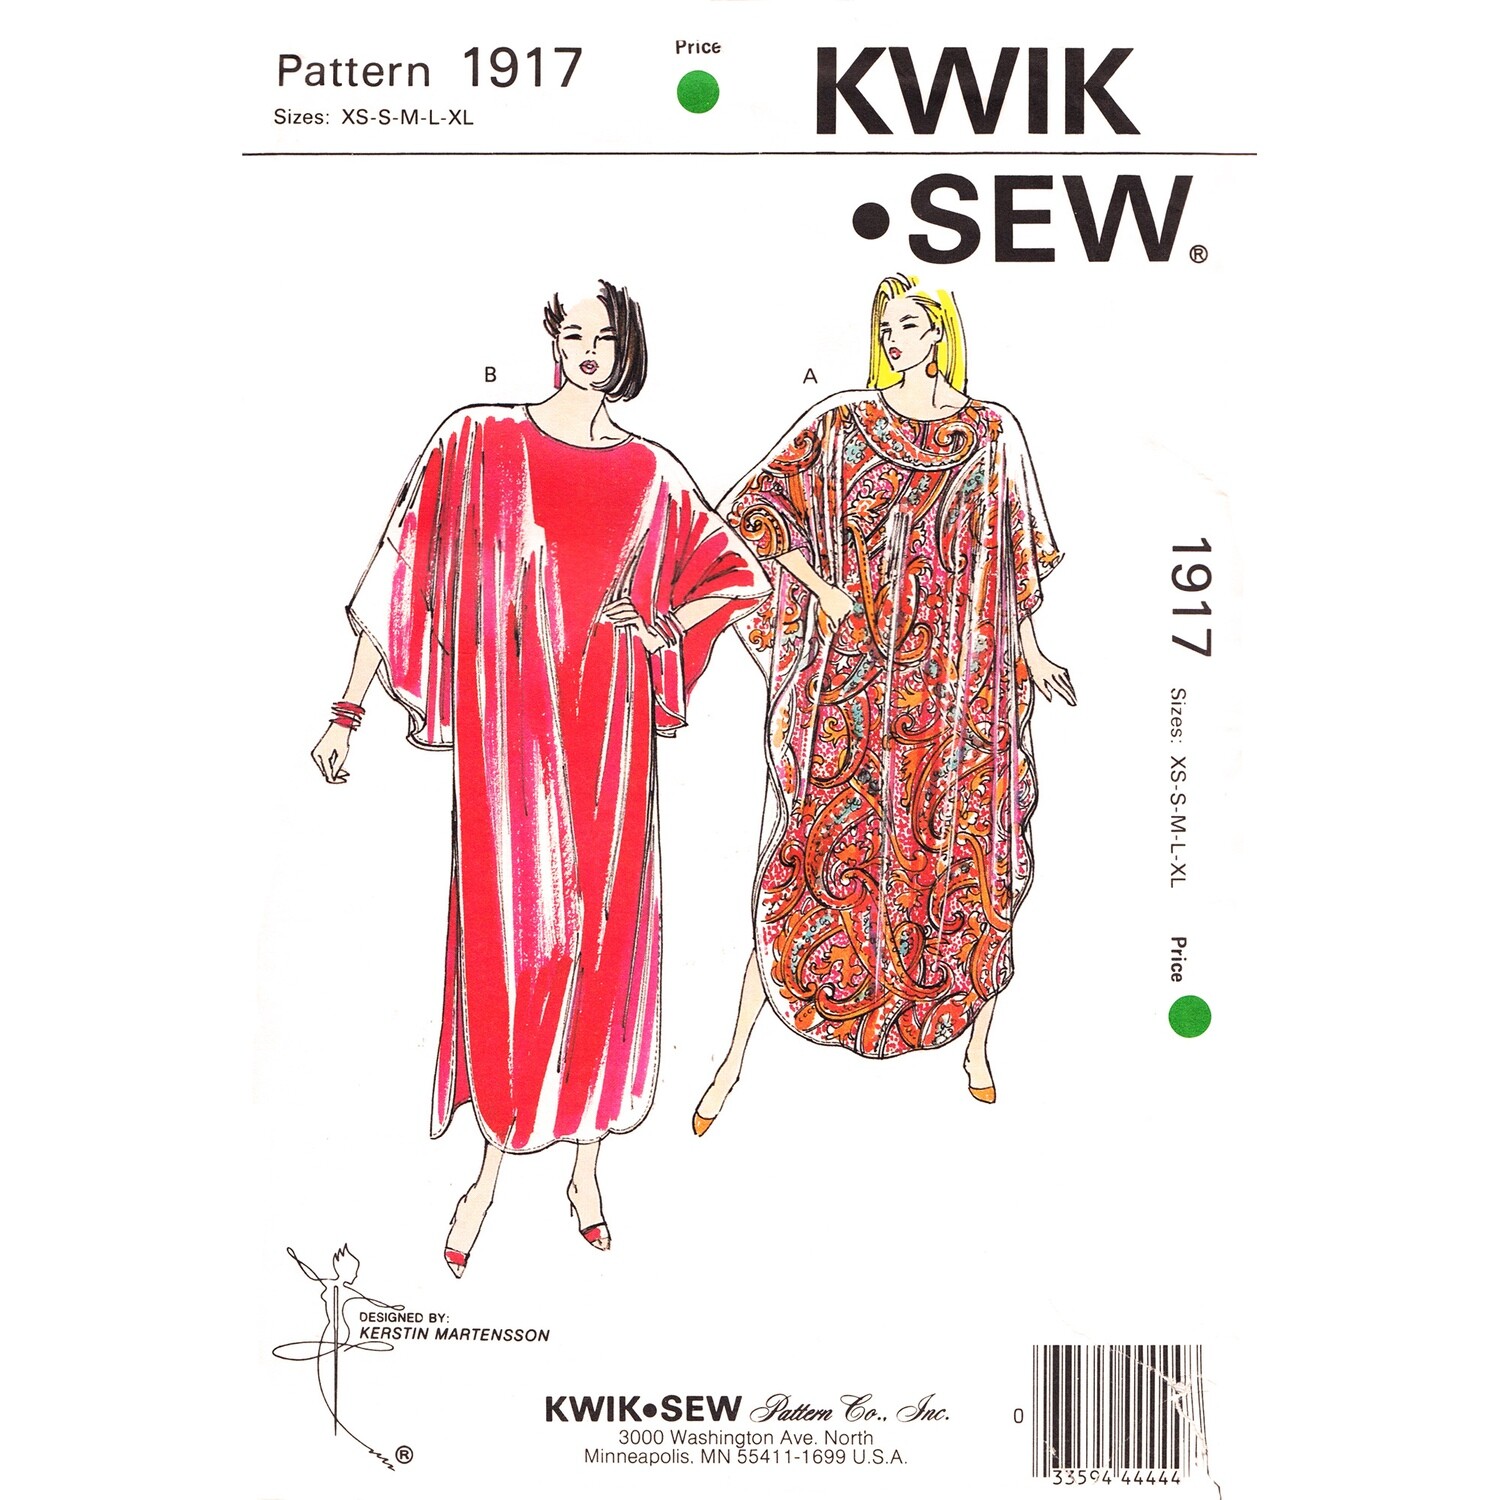 Kwik Sew 1917 pattern